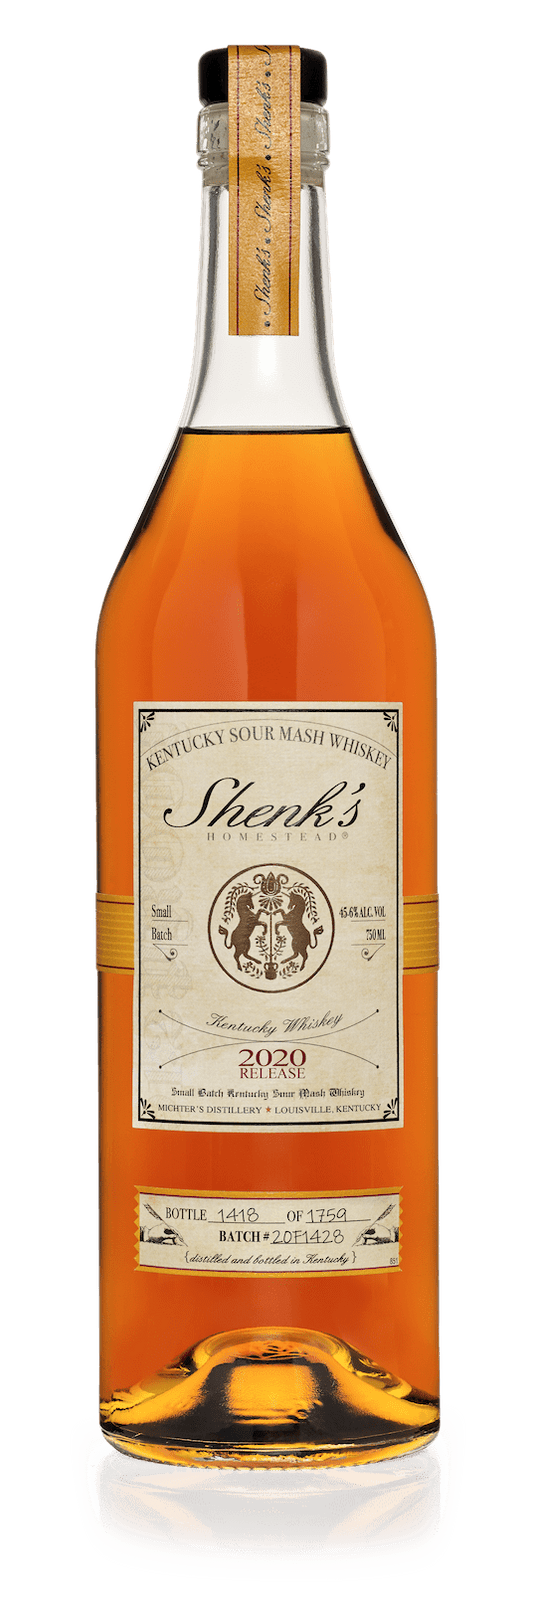 Shenk's Homestead Sour Mash Whiskey